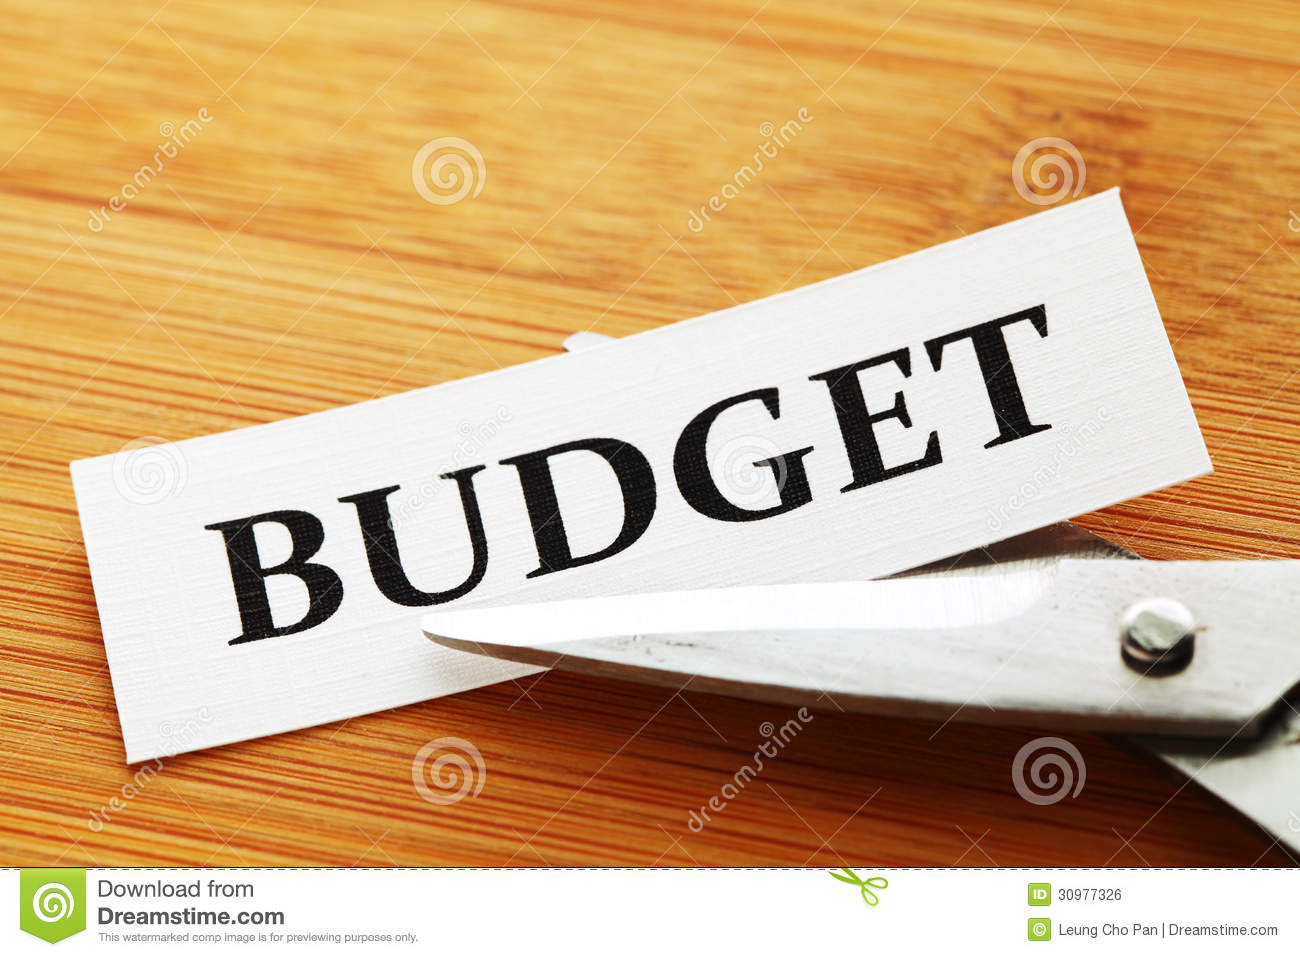 Budget Cut Royalty Free Stock Image   Image  30977326